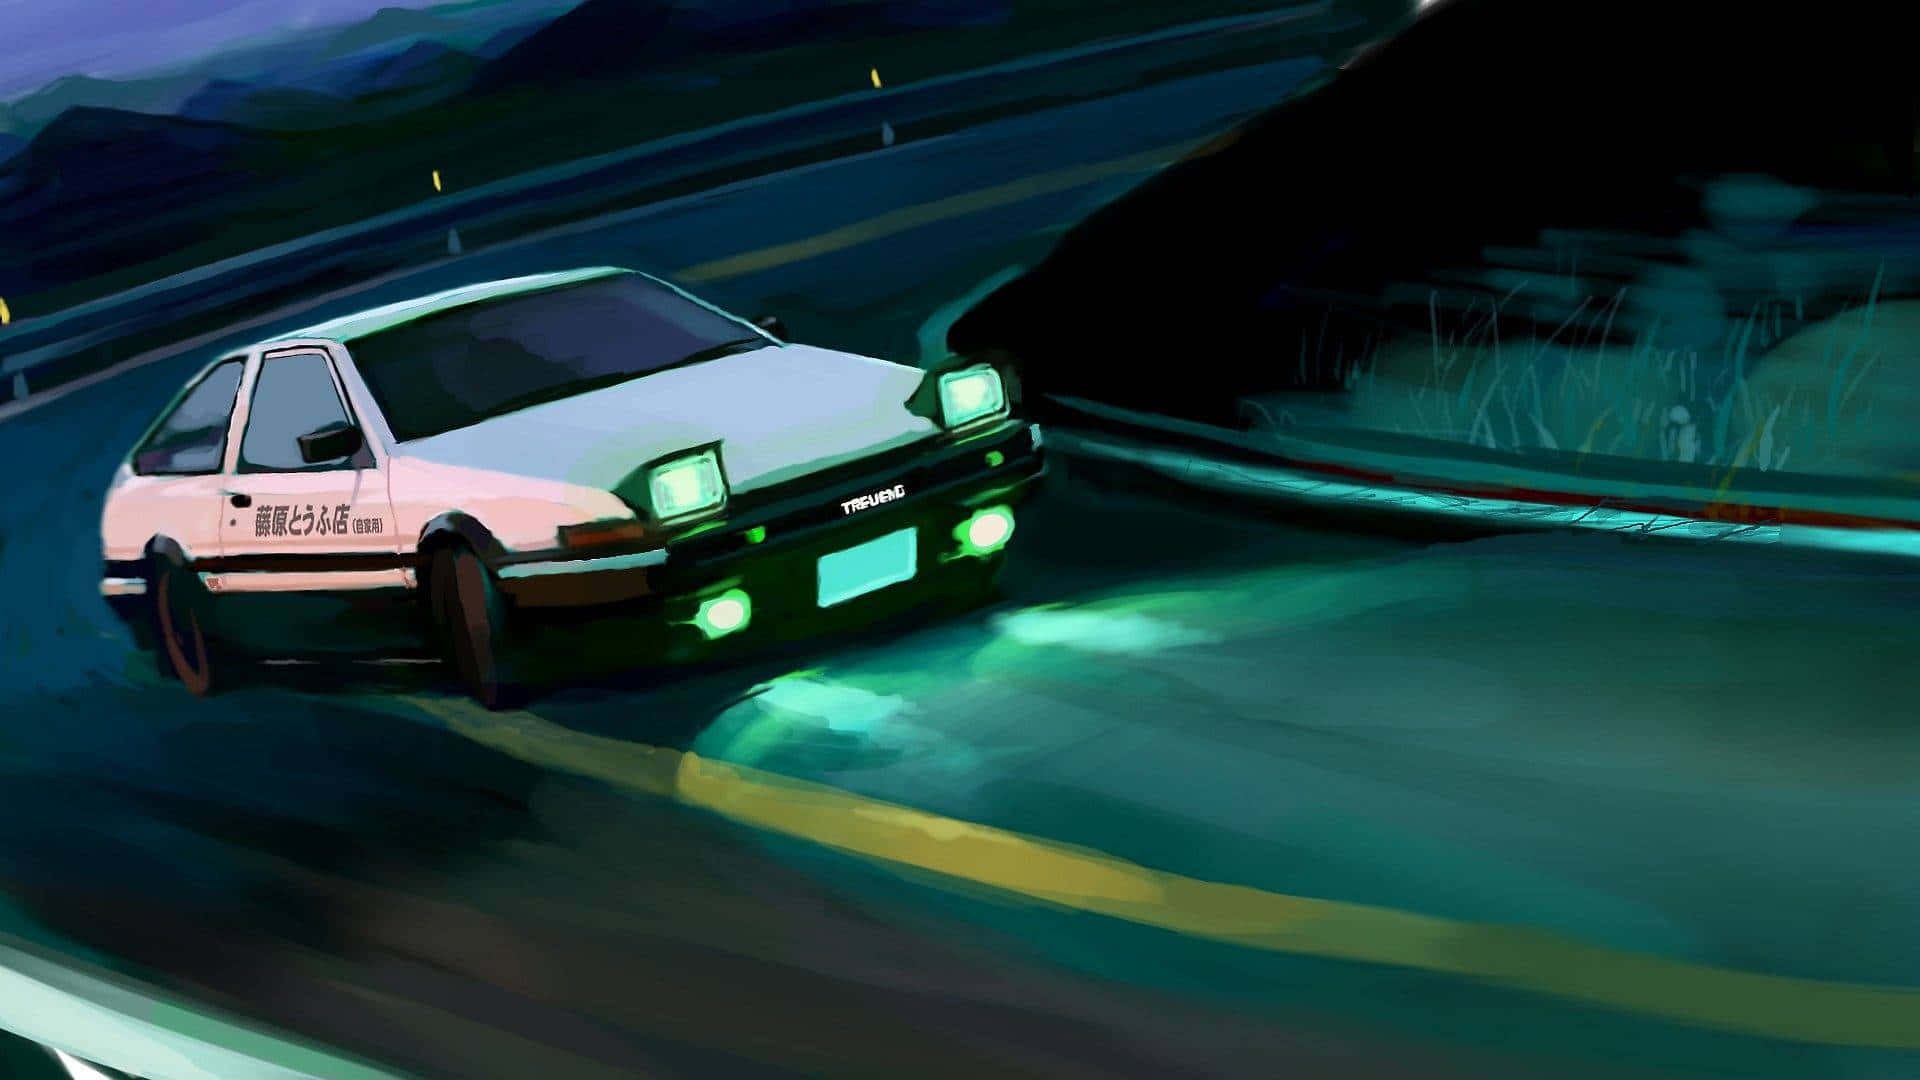 "Created to Inspire: Anime Car"